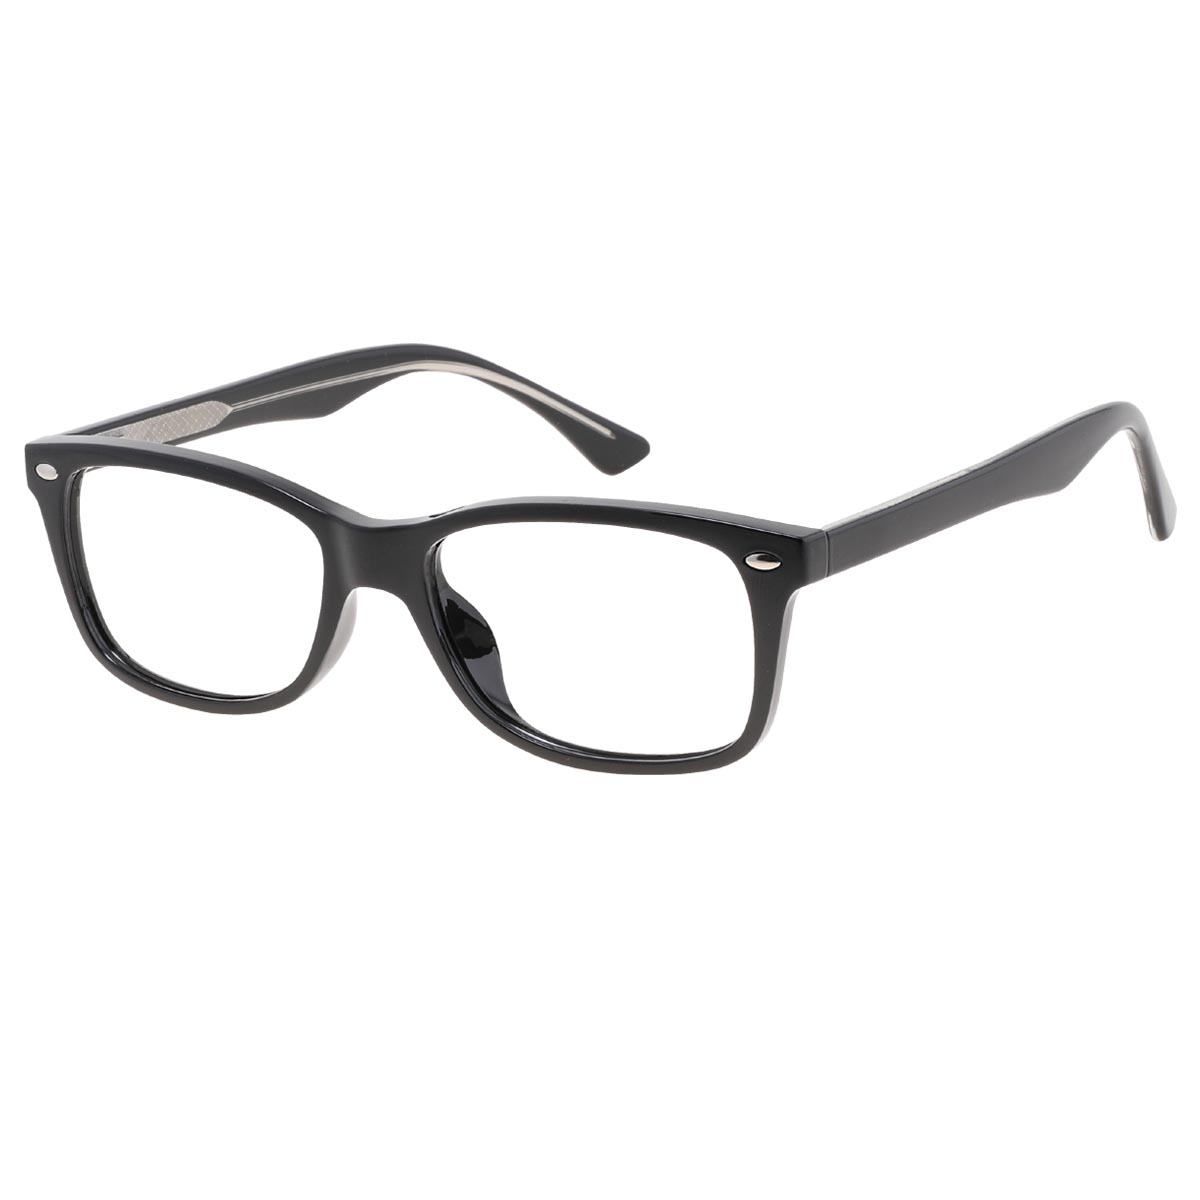 Theras - Square Black Reading Glasses for Men & Women